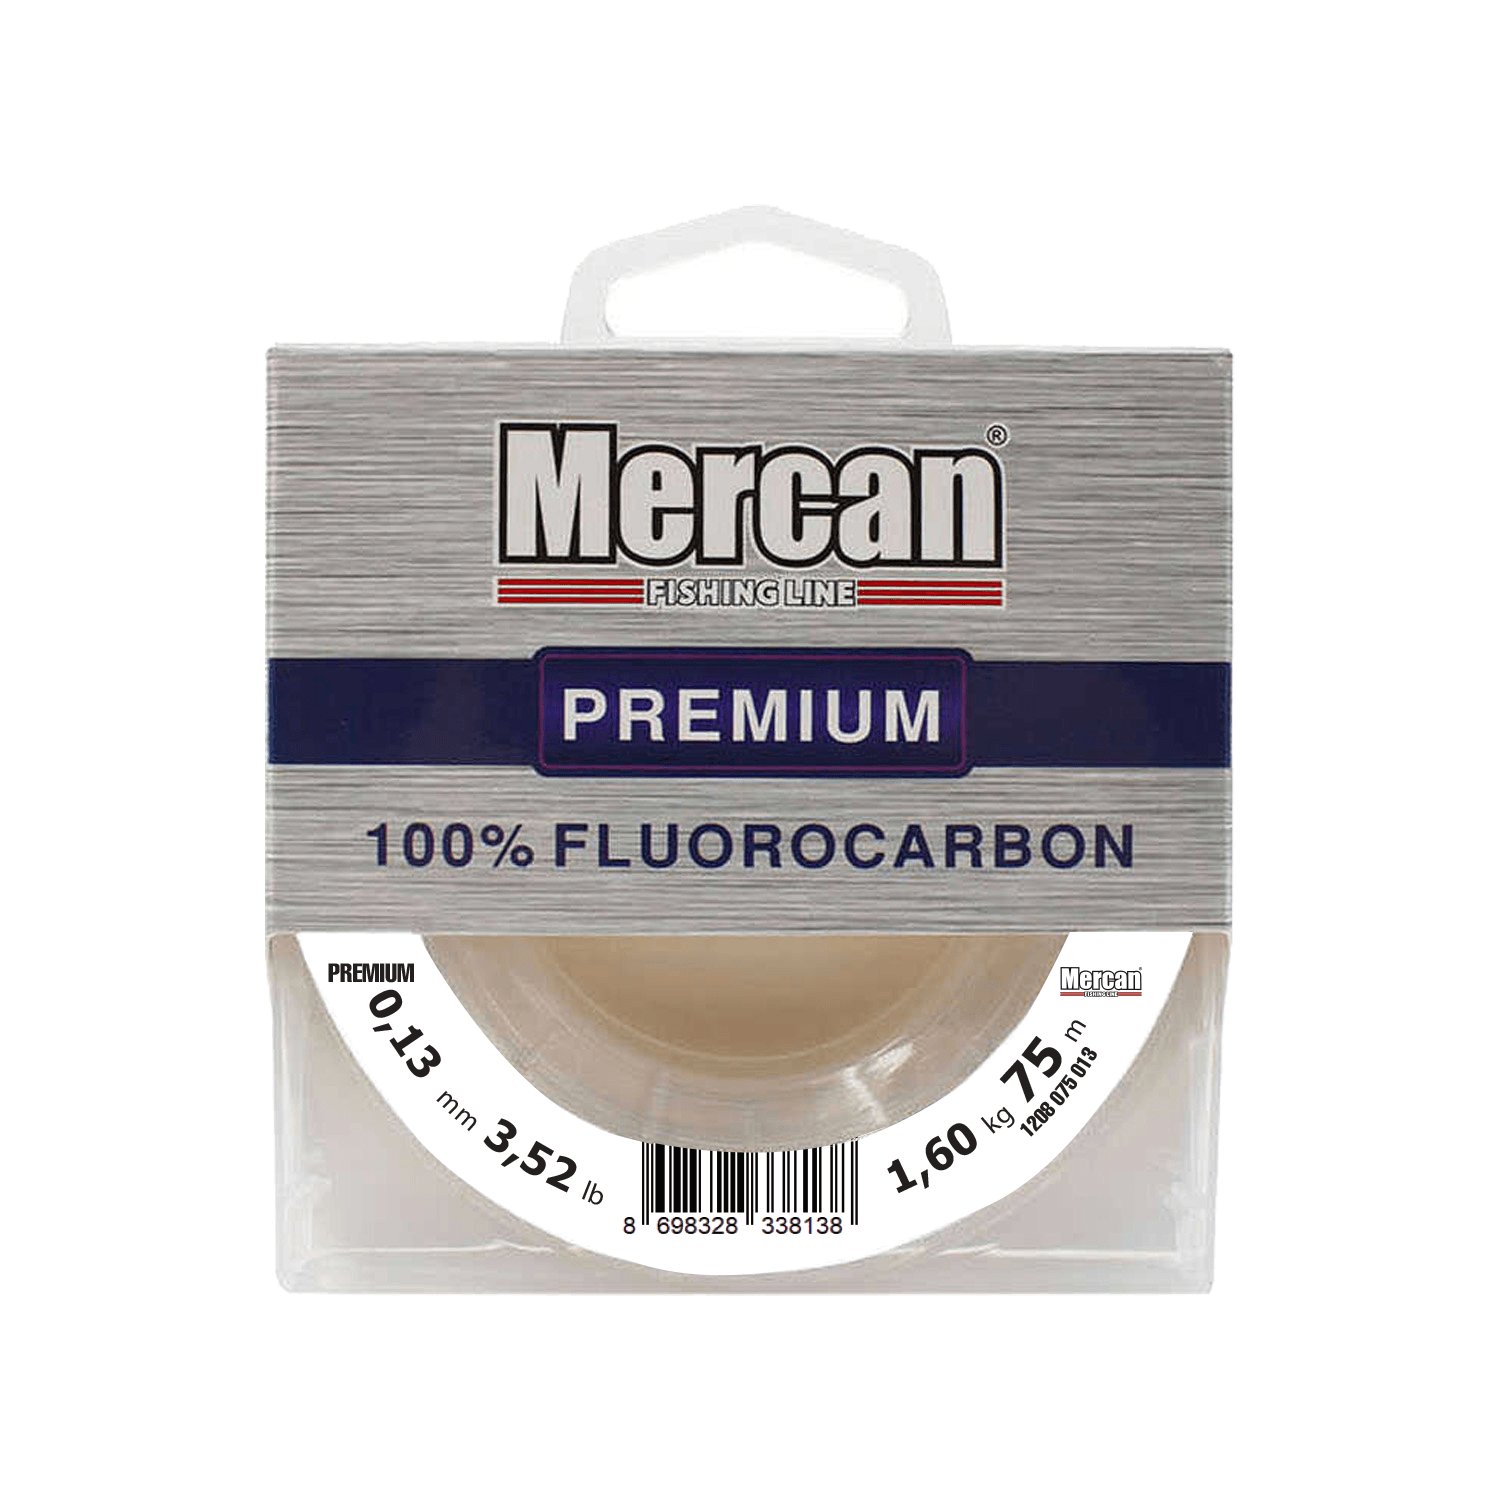 Mercan Fluorocarbon Premium 75 m Makara Misina